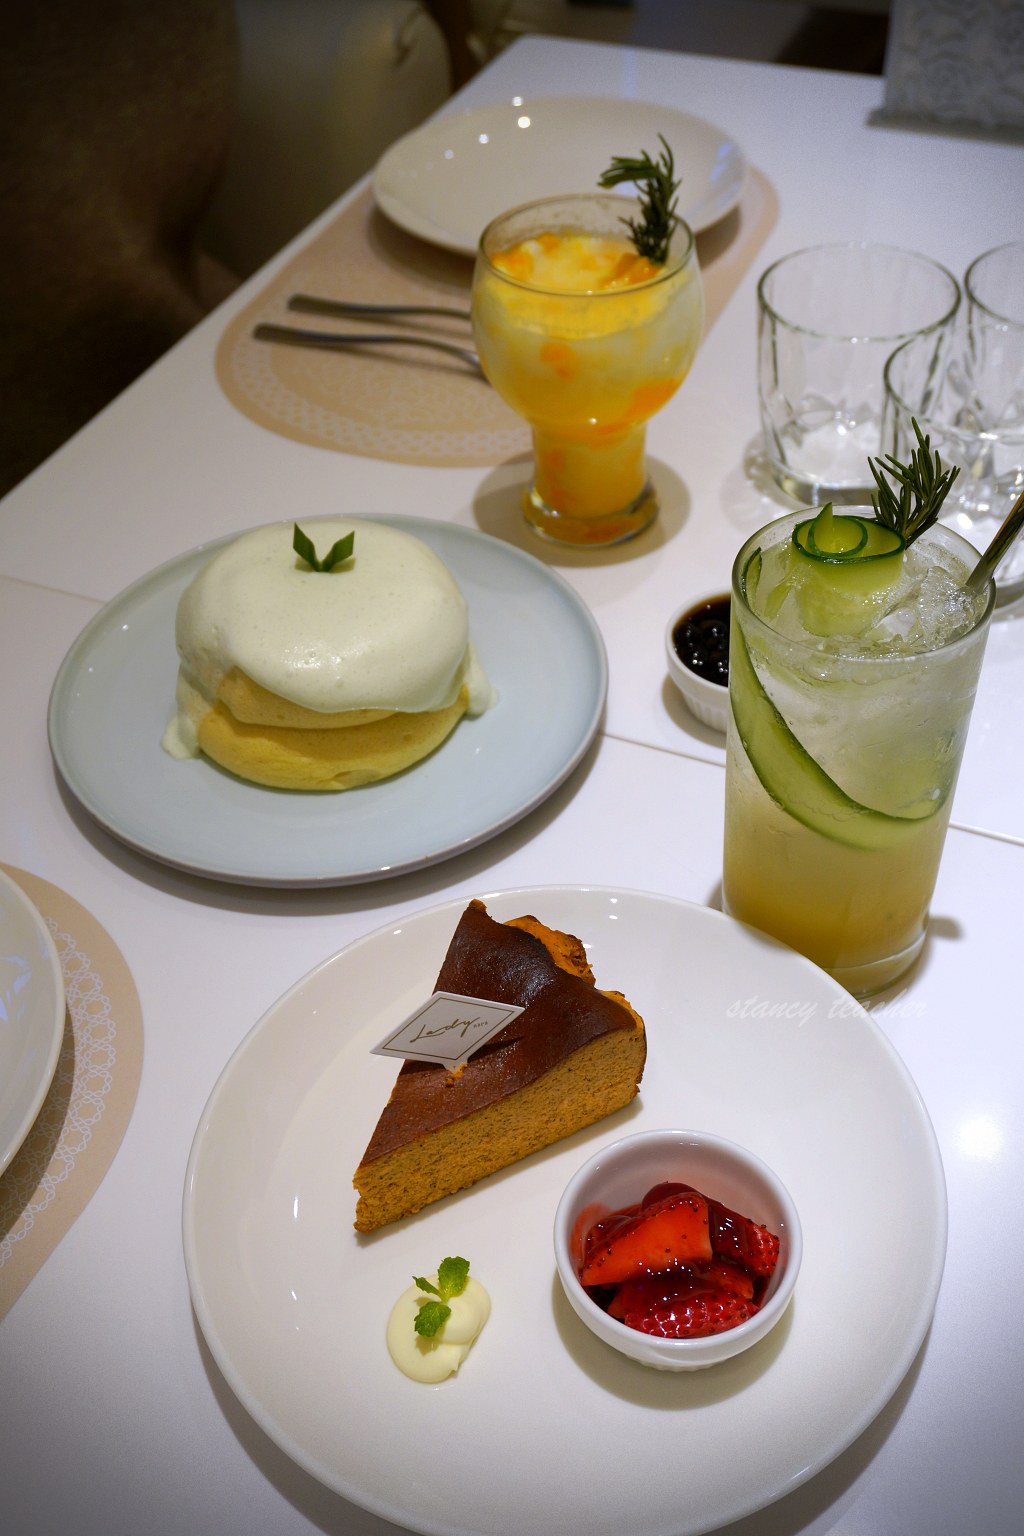 Lady nara 曼谷新泰式料理 台北統一時代店，來份創意泰式甜點享受偽出國的午後時光。